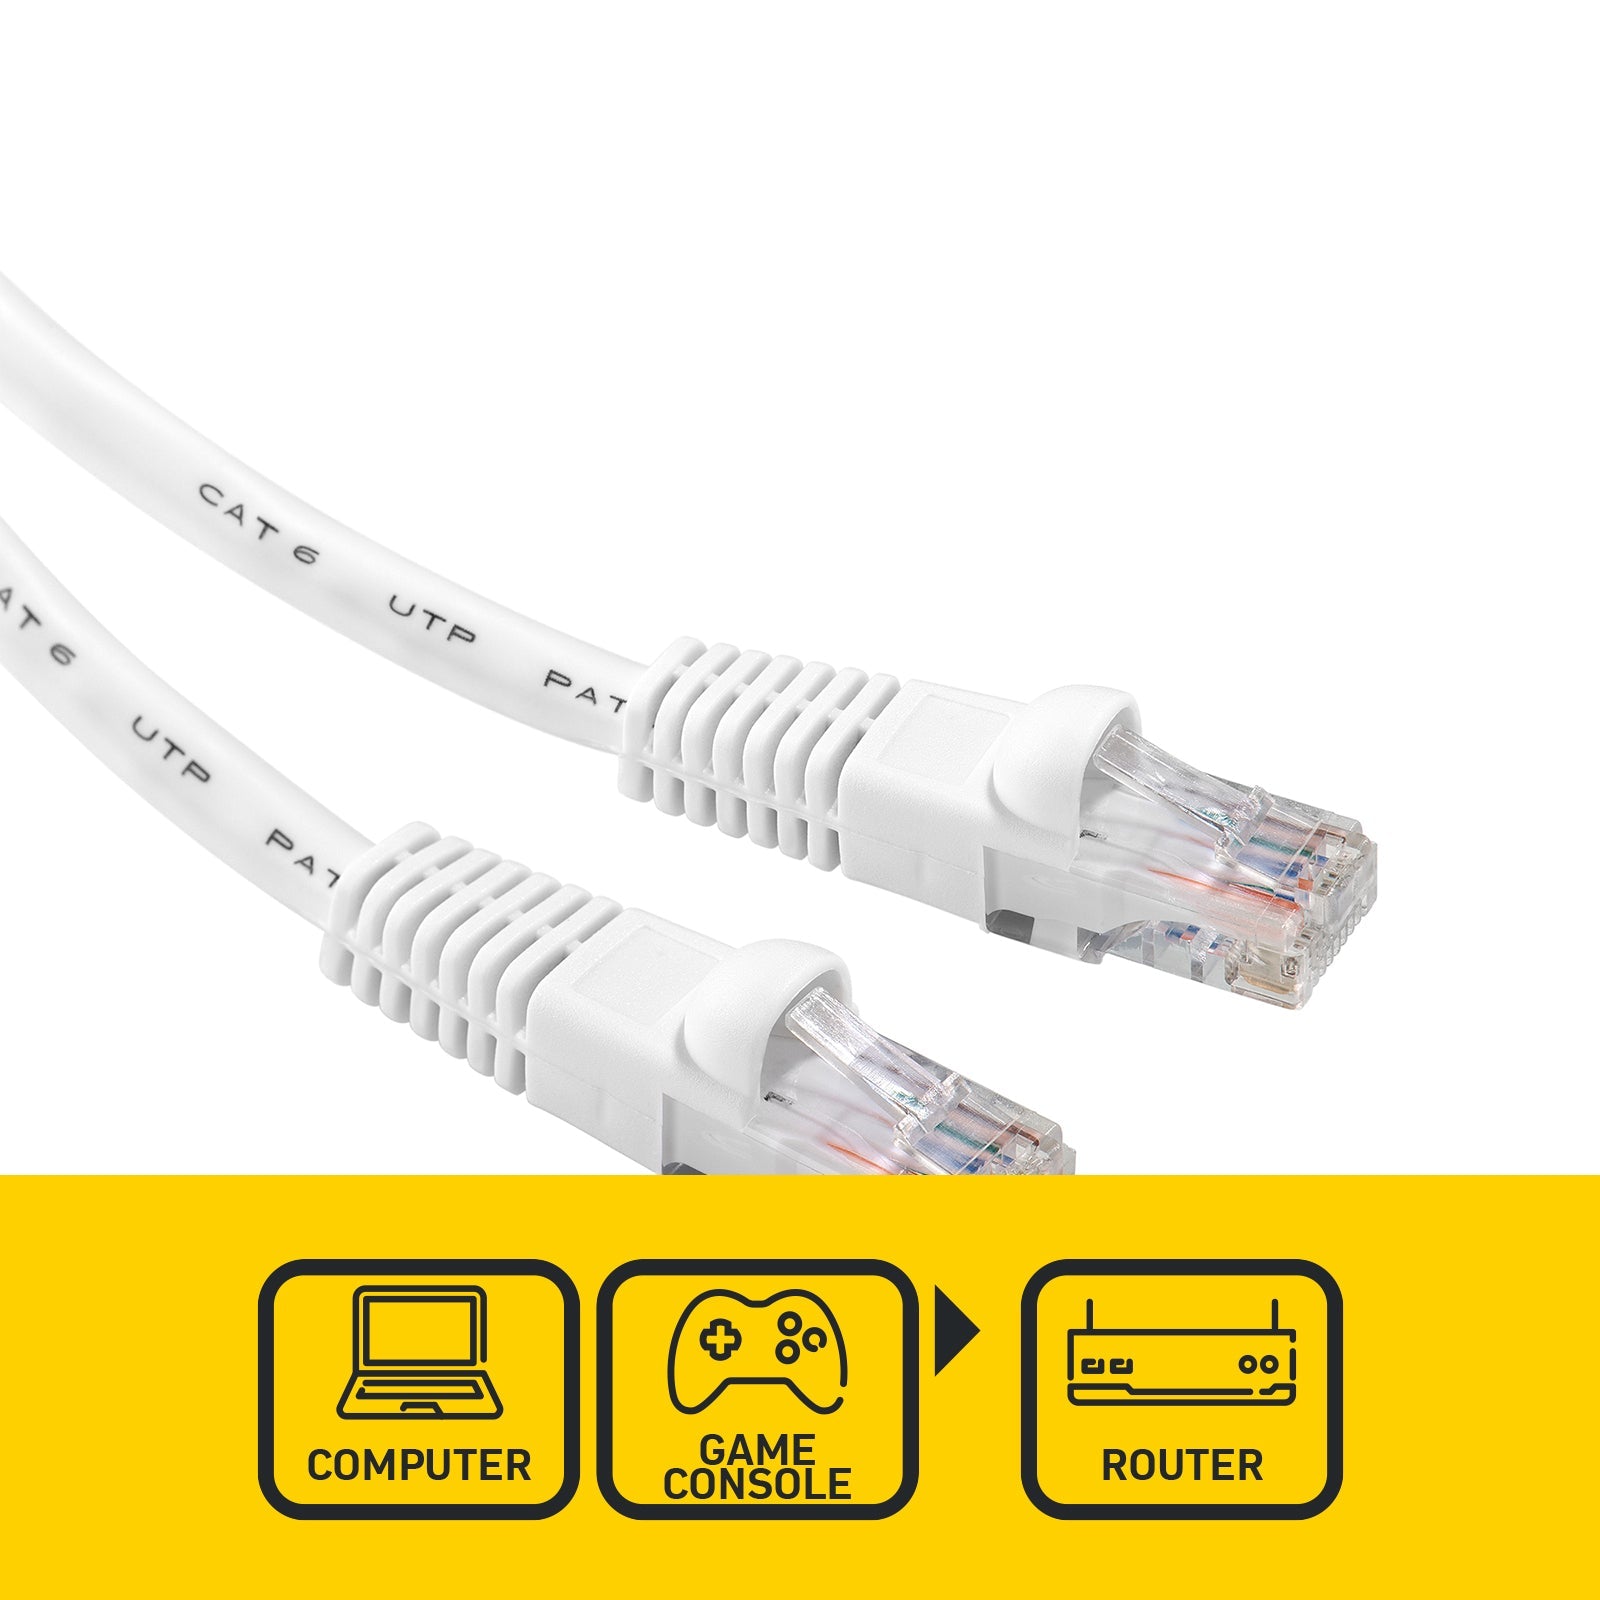 Internet Router Cable Computer Cat6 - Ethernet Cable Cat6 Lan 10m